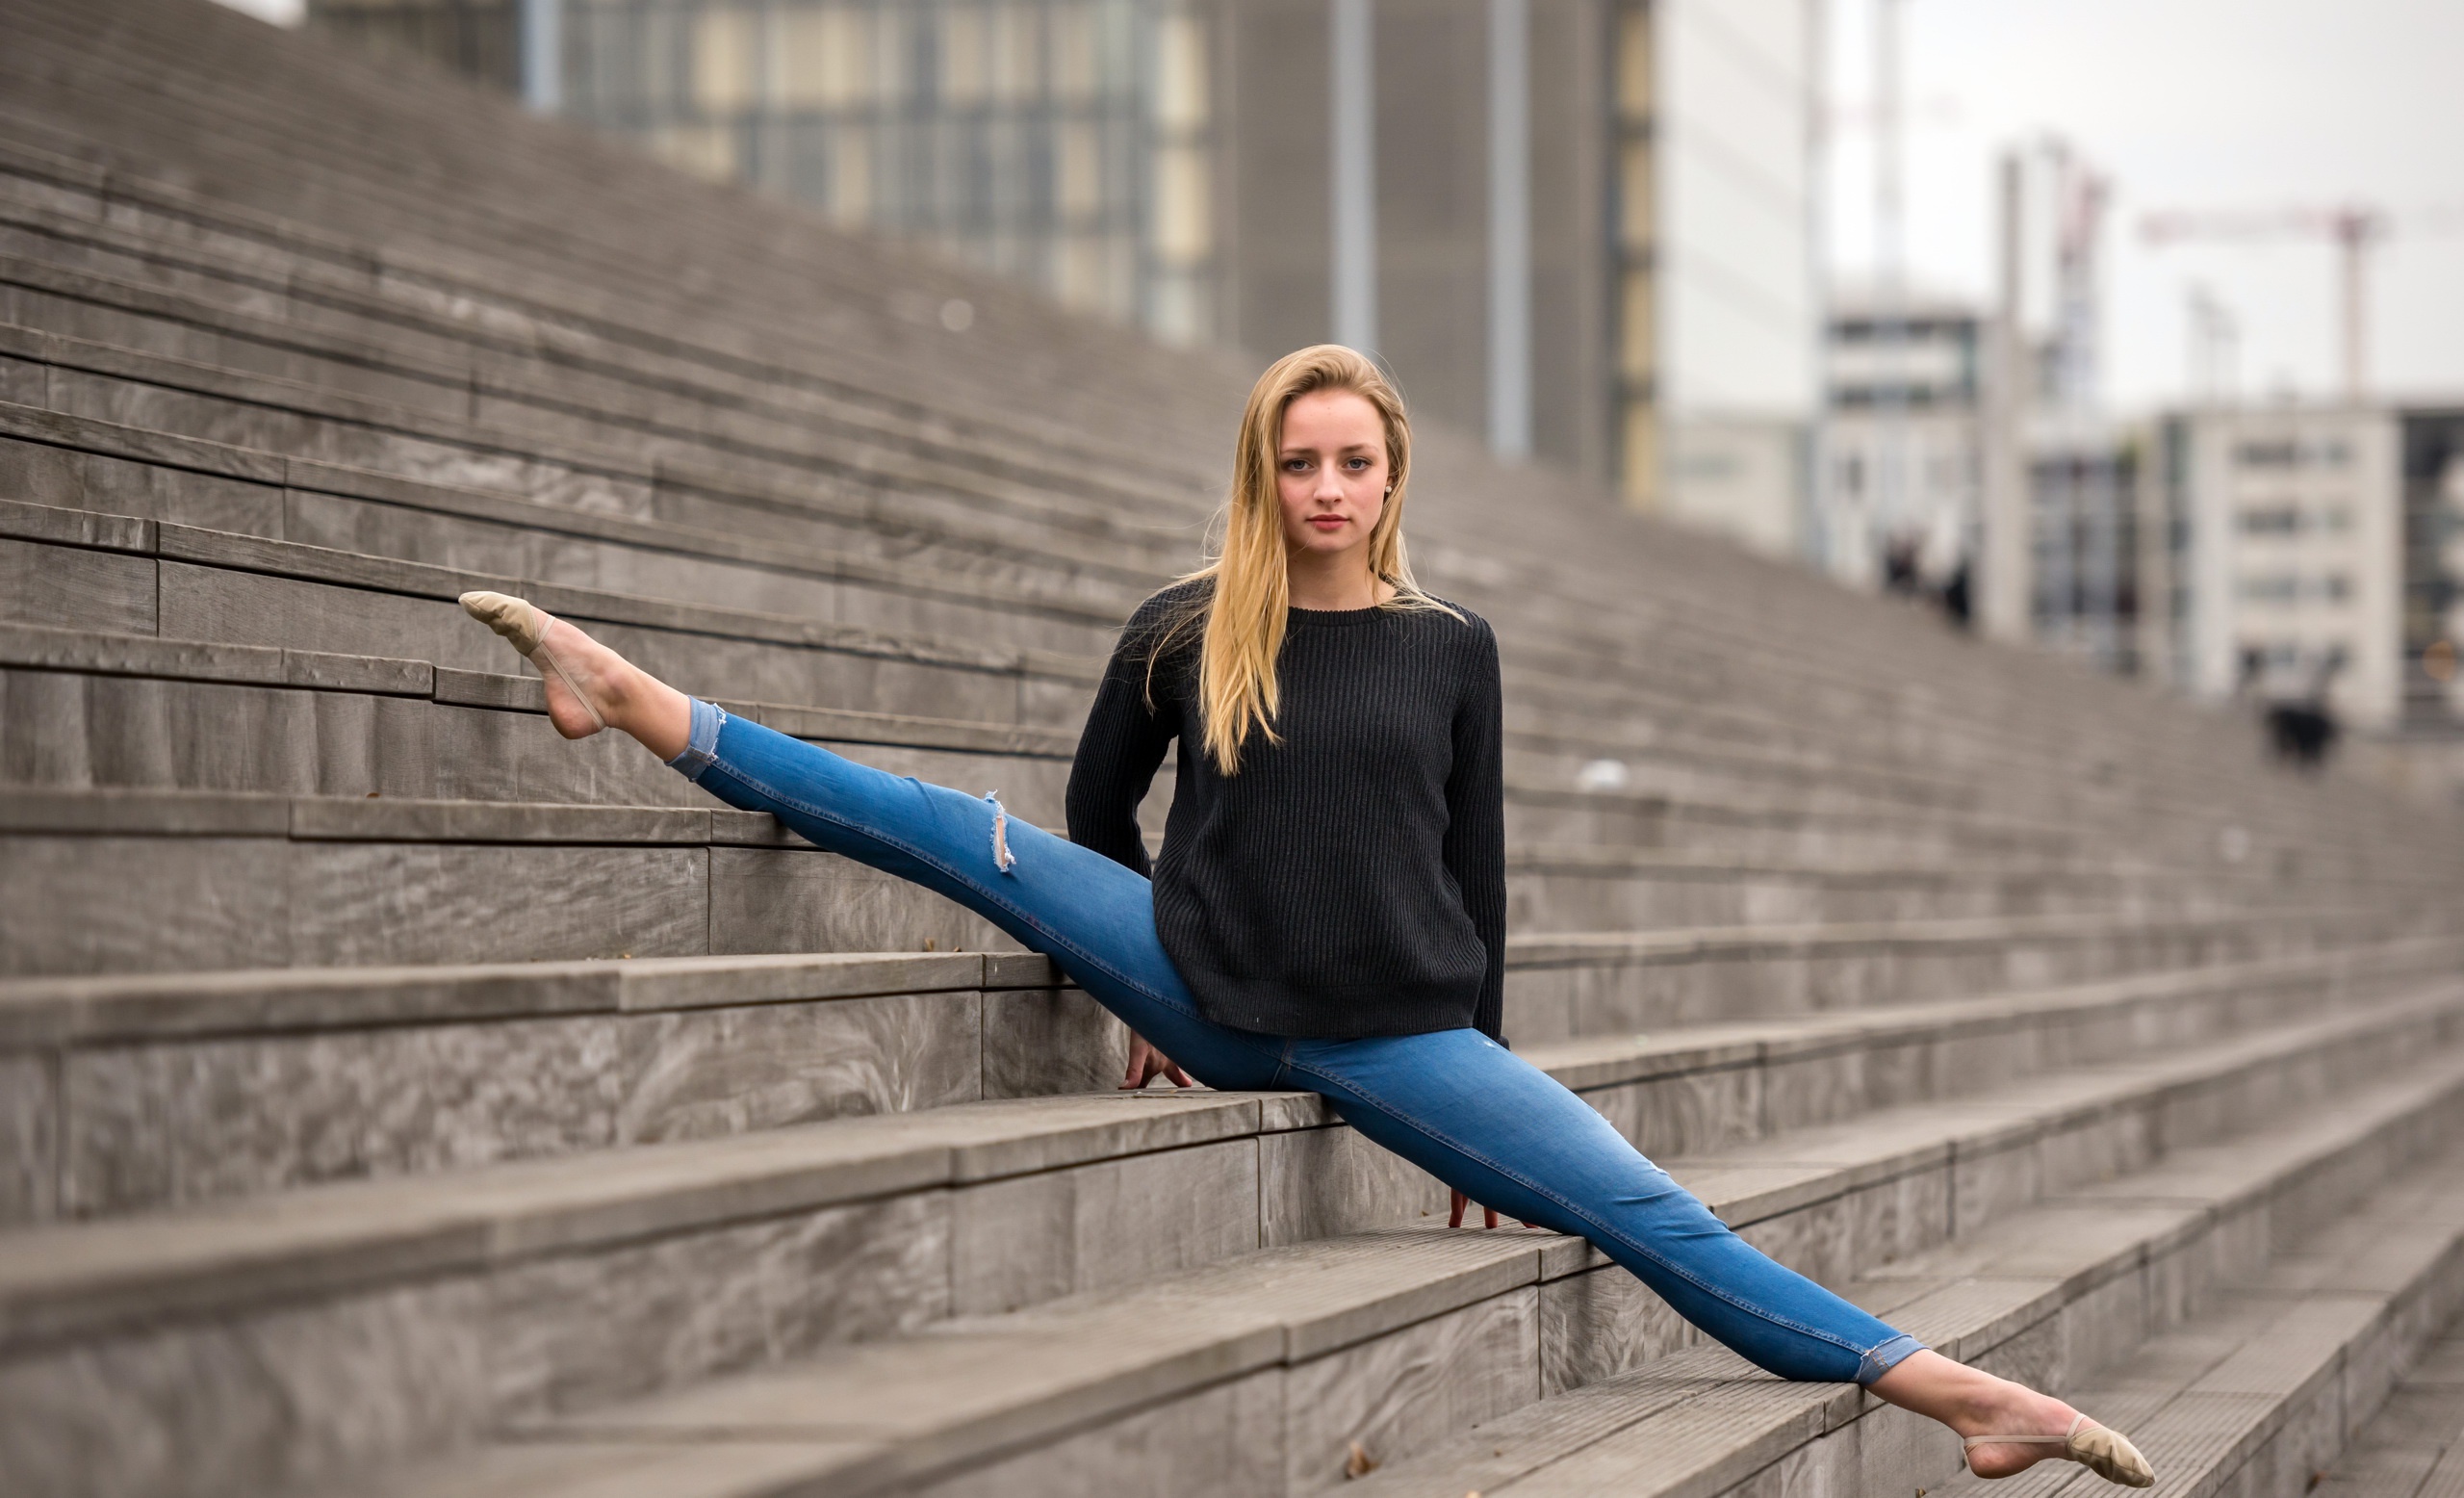 People 2560x1556 urban stairs spread legs women outdoors women model blonde pointed toes splits flexible sweater